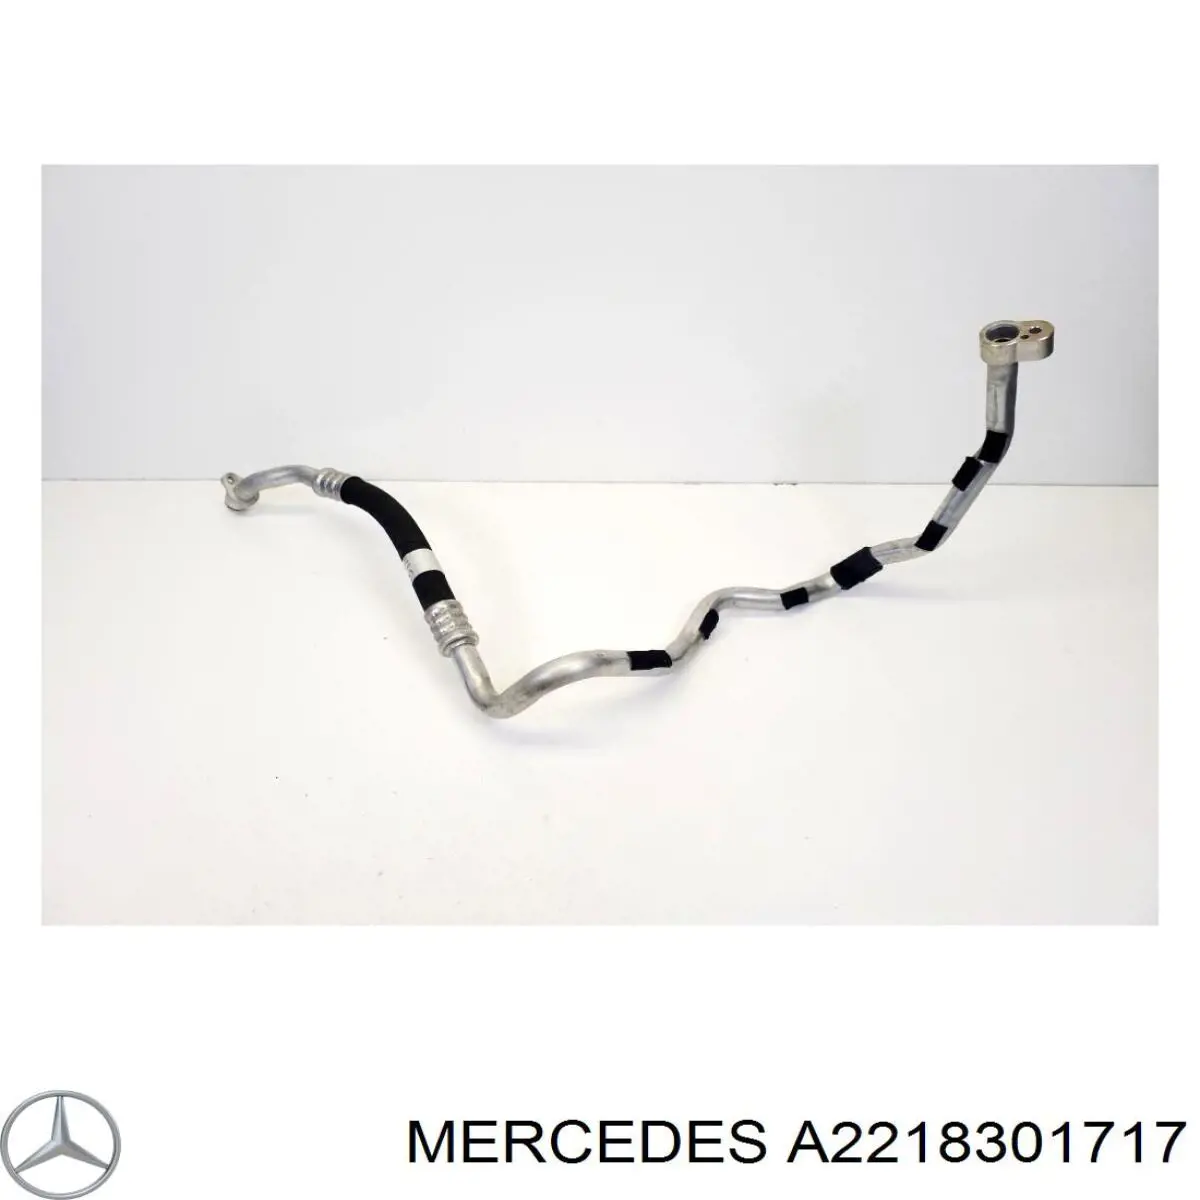 A2218301717 Mercedes